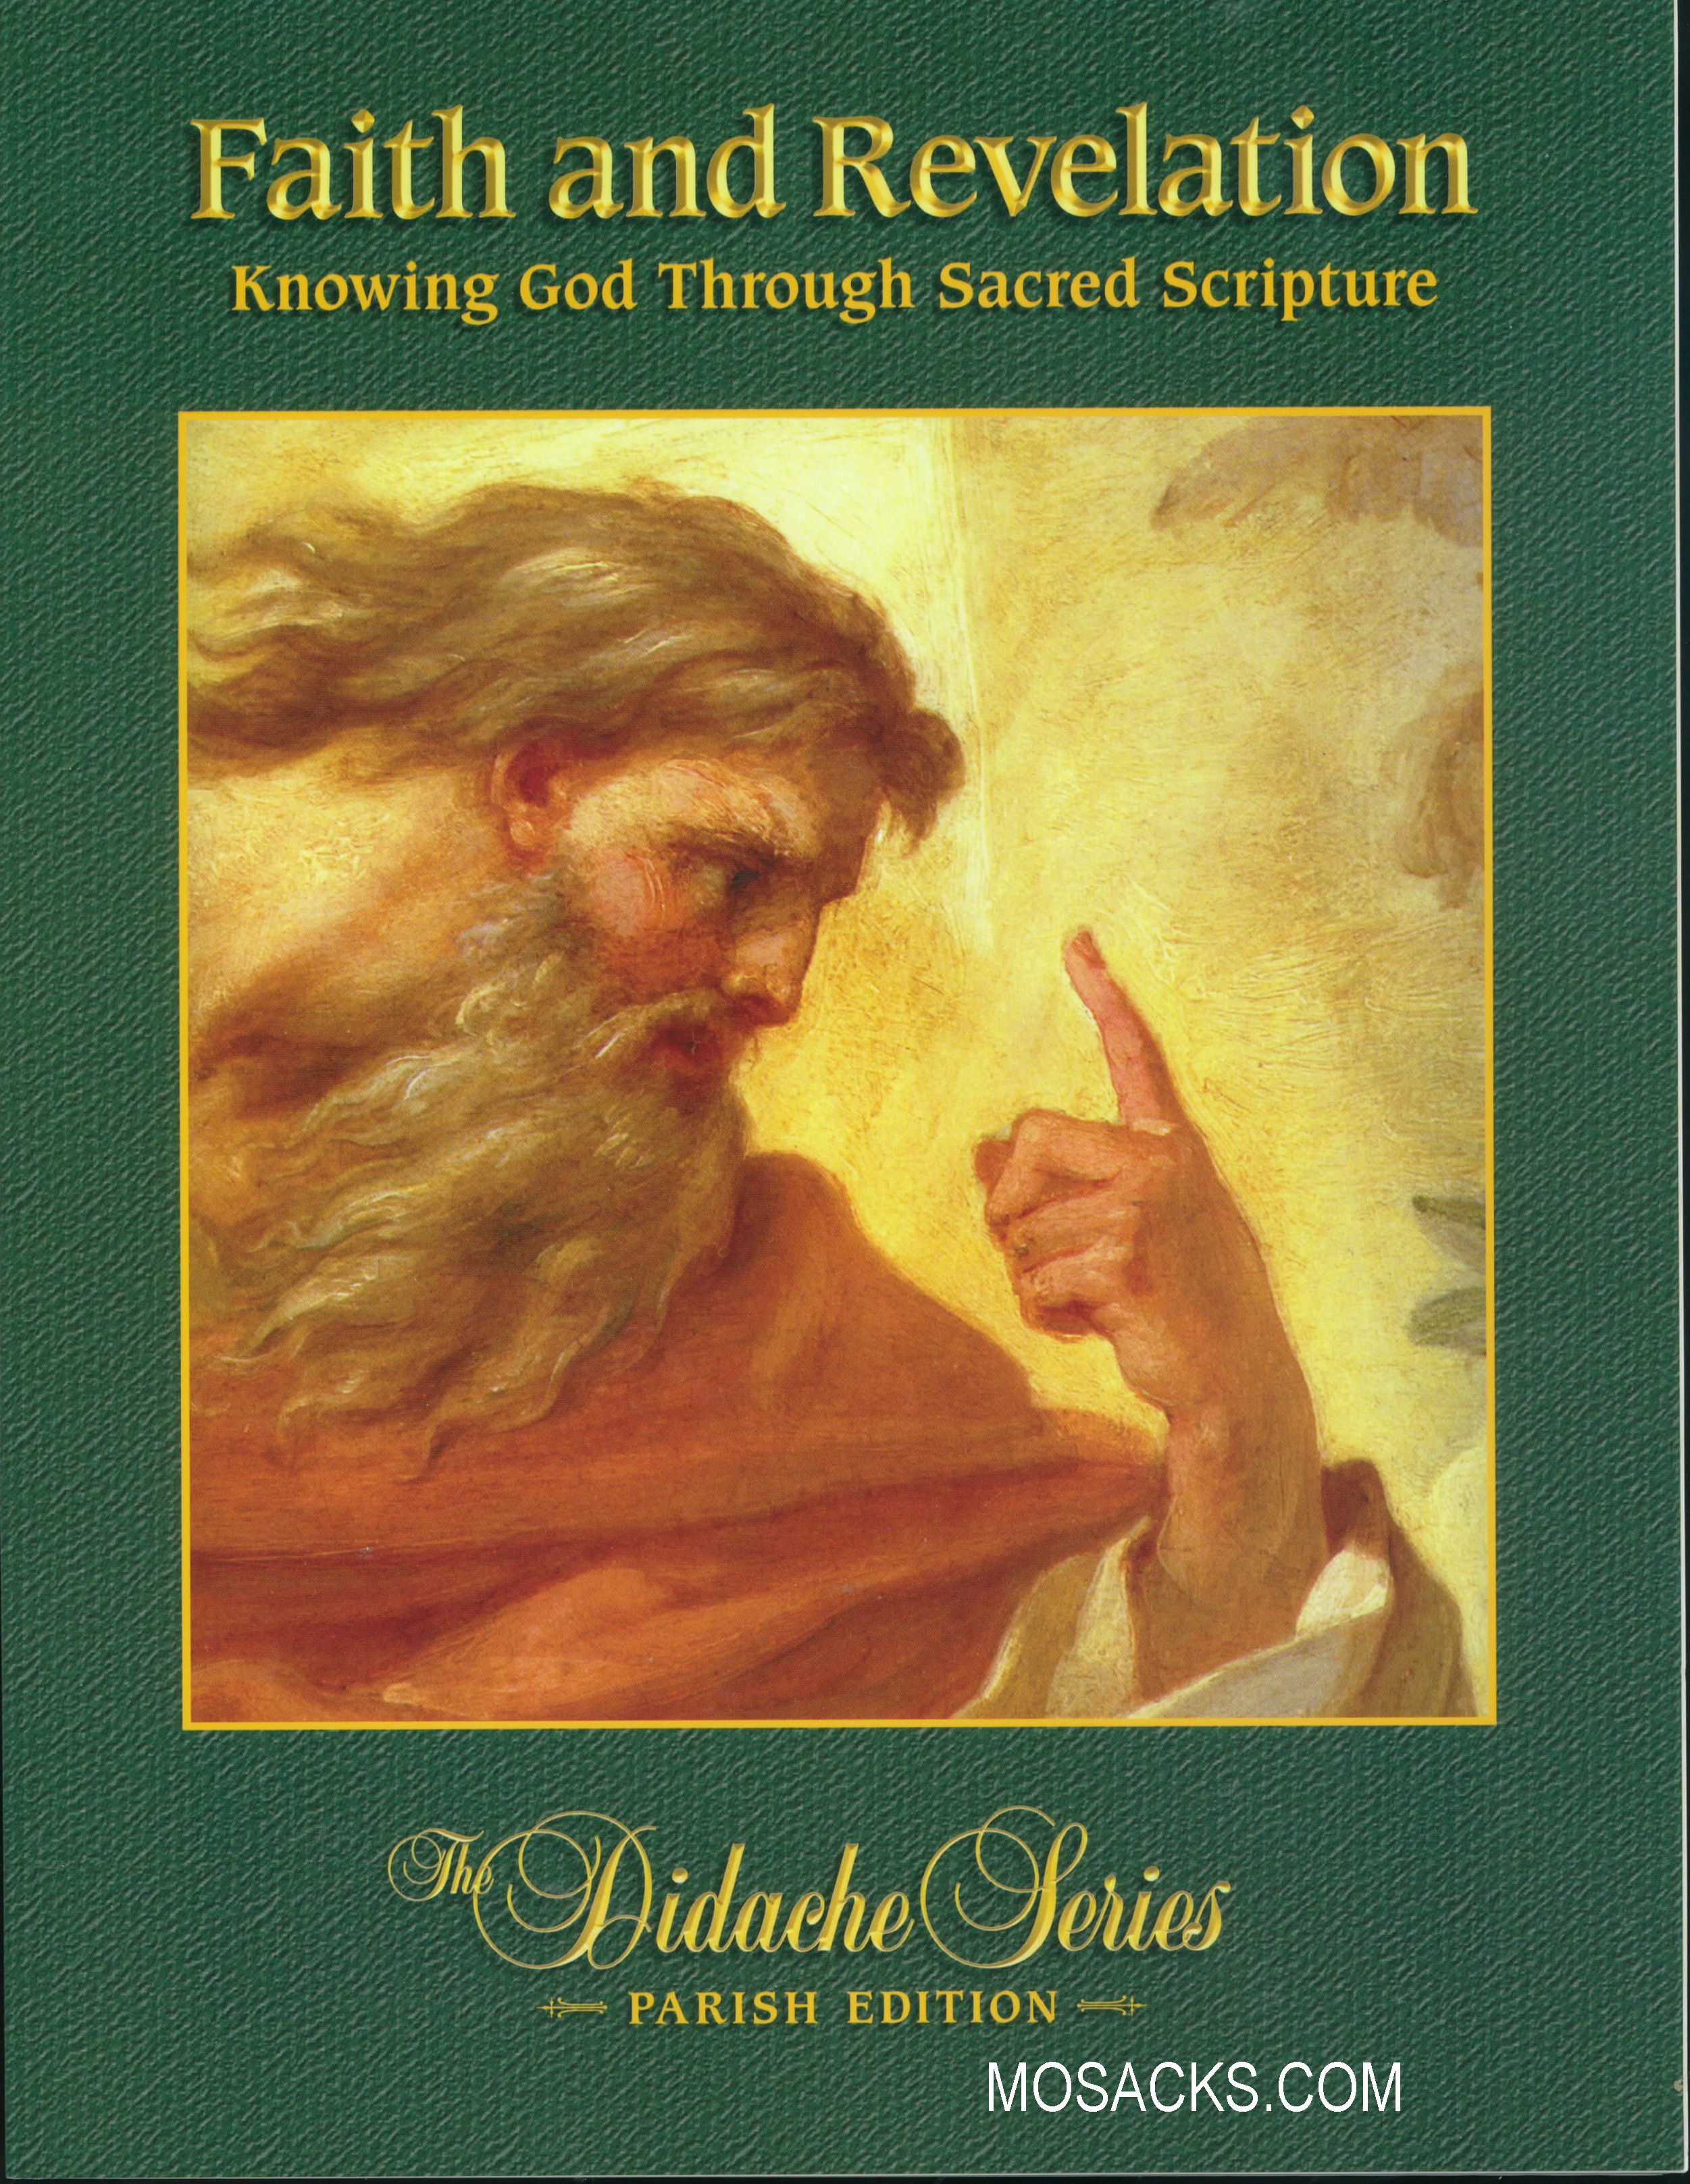 Didache Series Faith and Revelation Parish Edition by Dr. Scott Hahn 45808